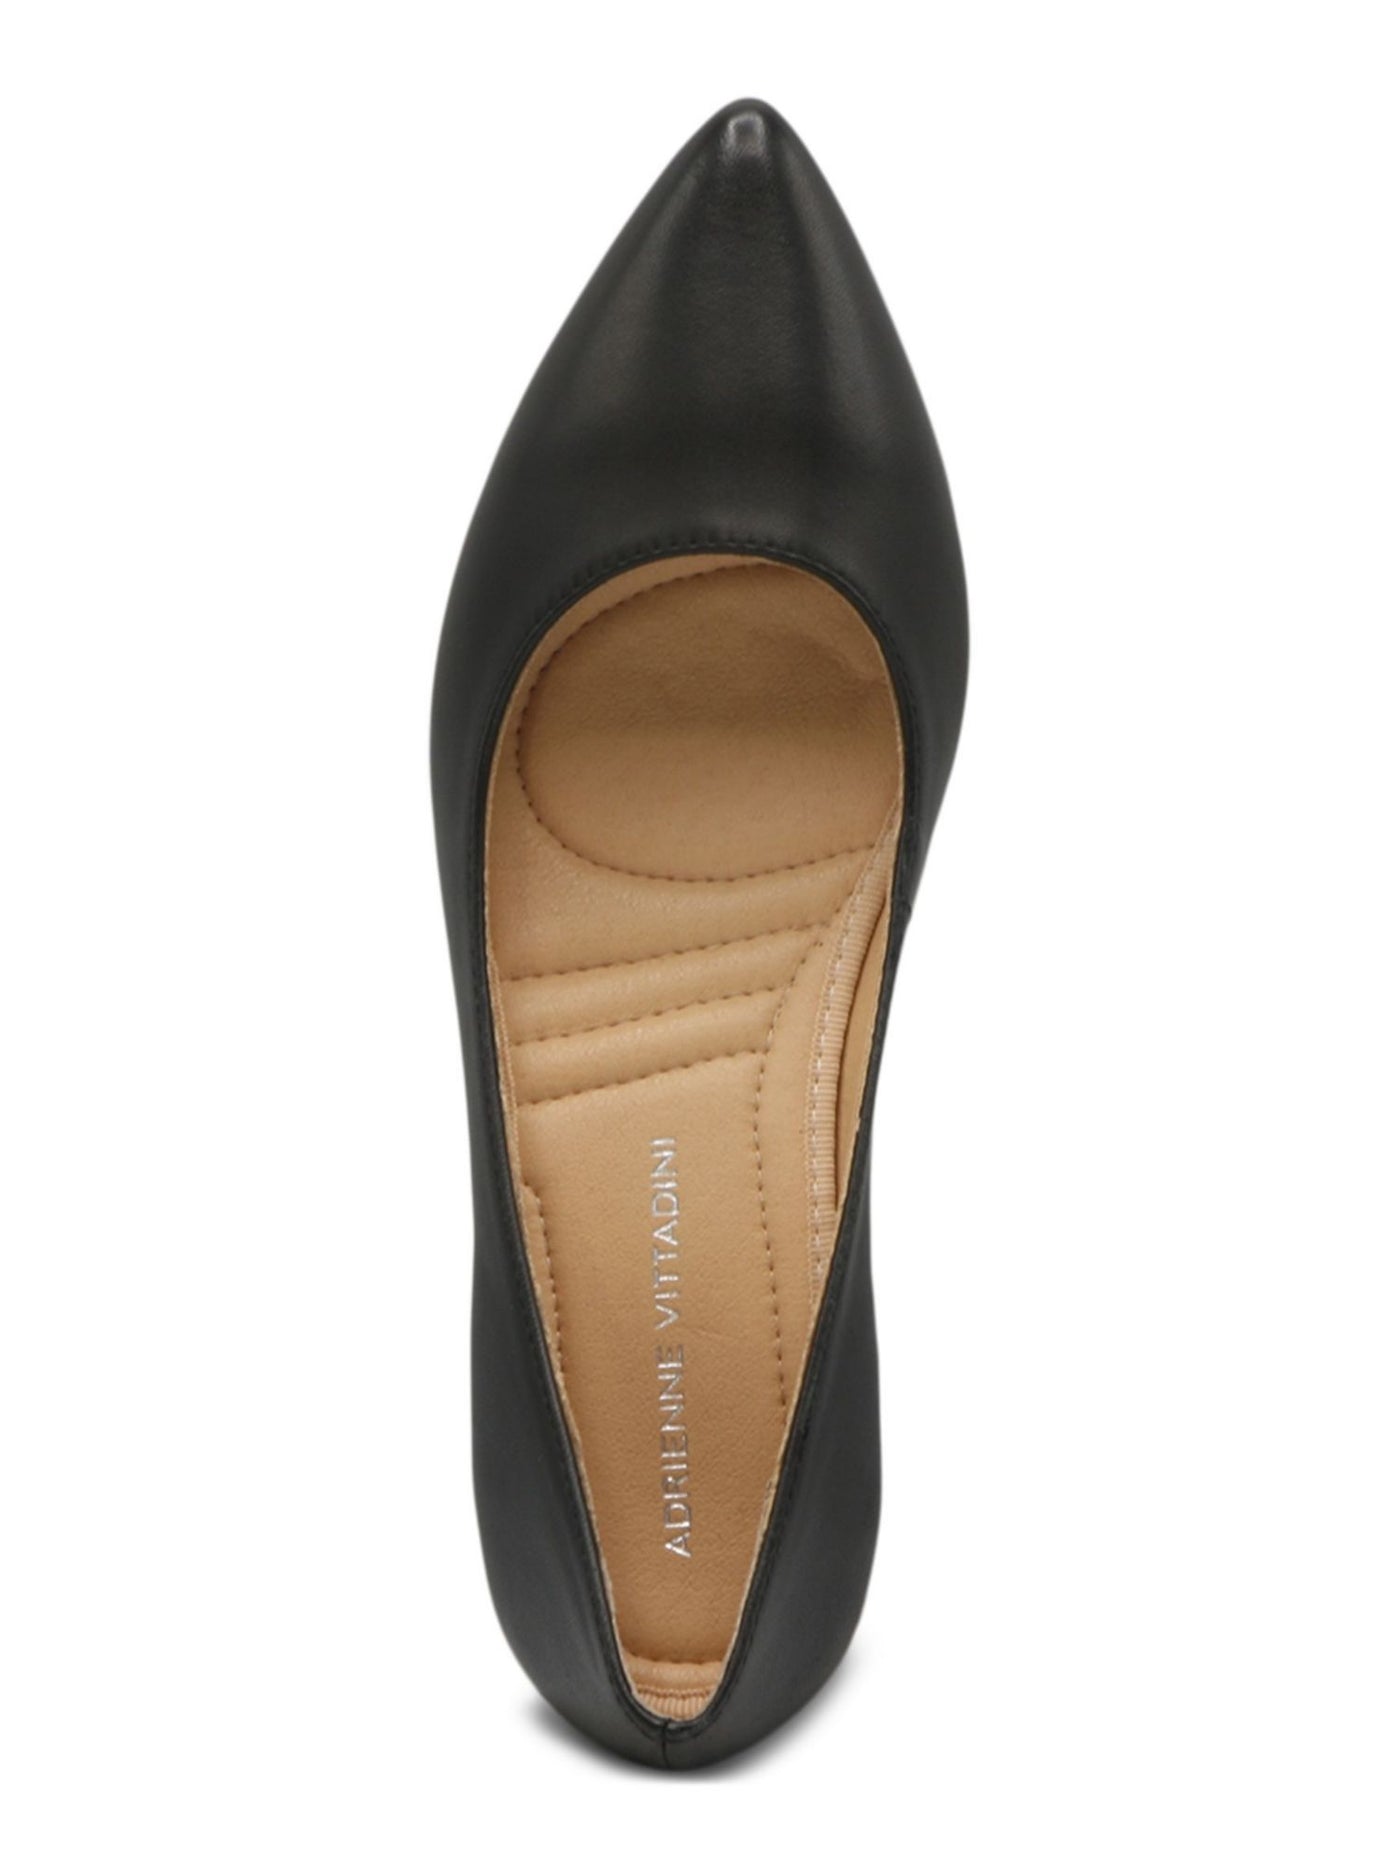 ADRIENNE VITTADINI Womens Black Cut Out Metallic Heel Padded Flori Pointed Toe Block Heel Slip On Dress Pumps Shoes 8.5 M